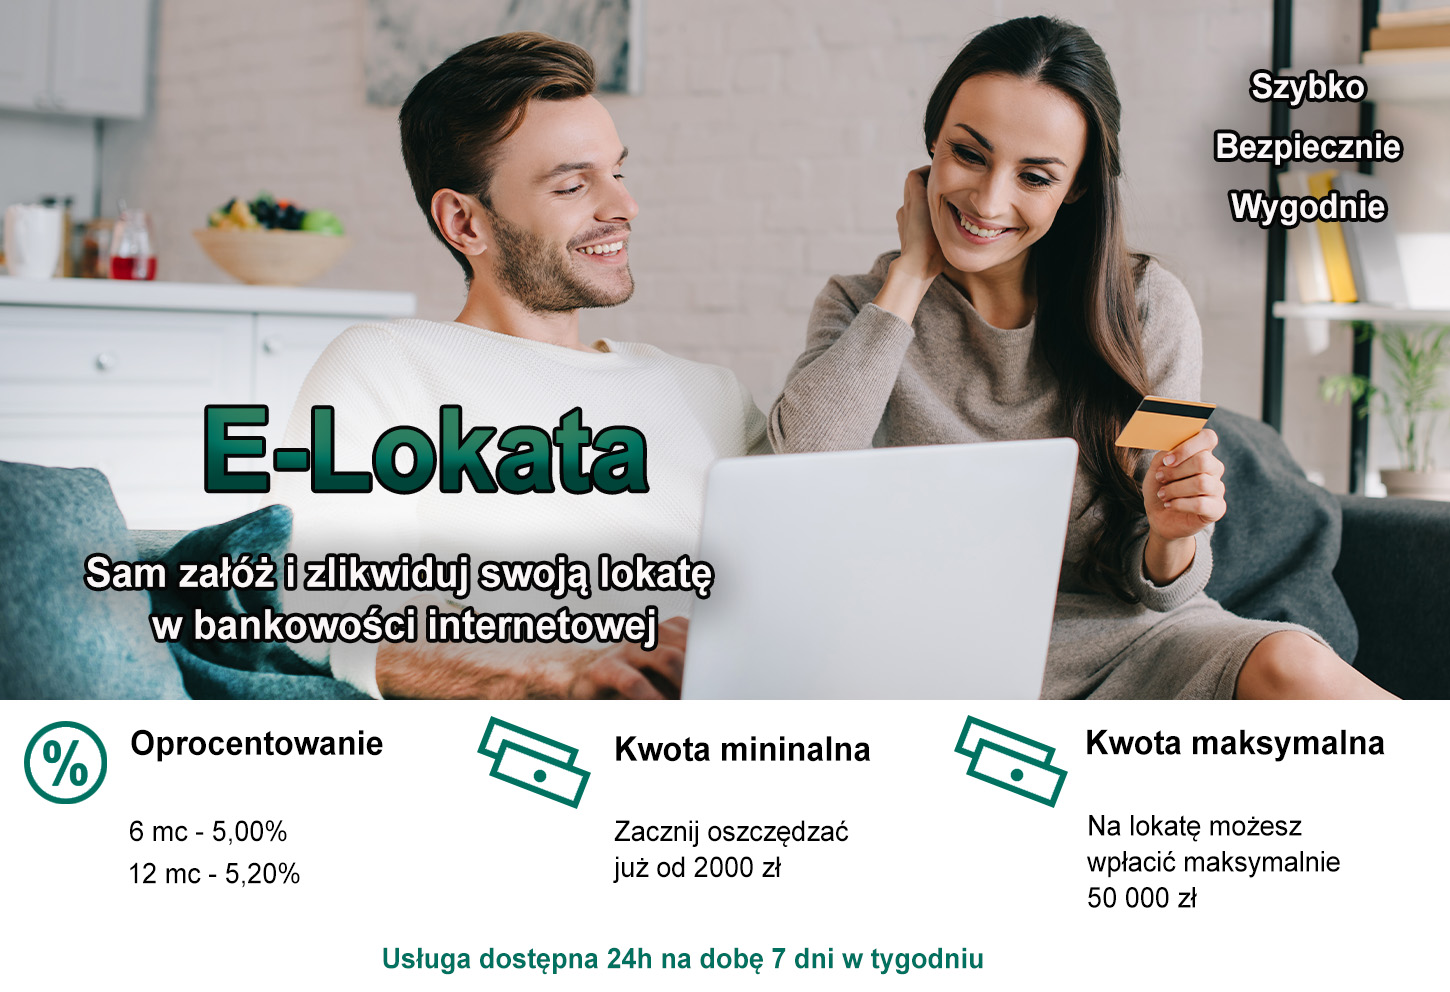 E-Lokata